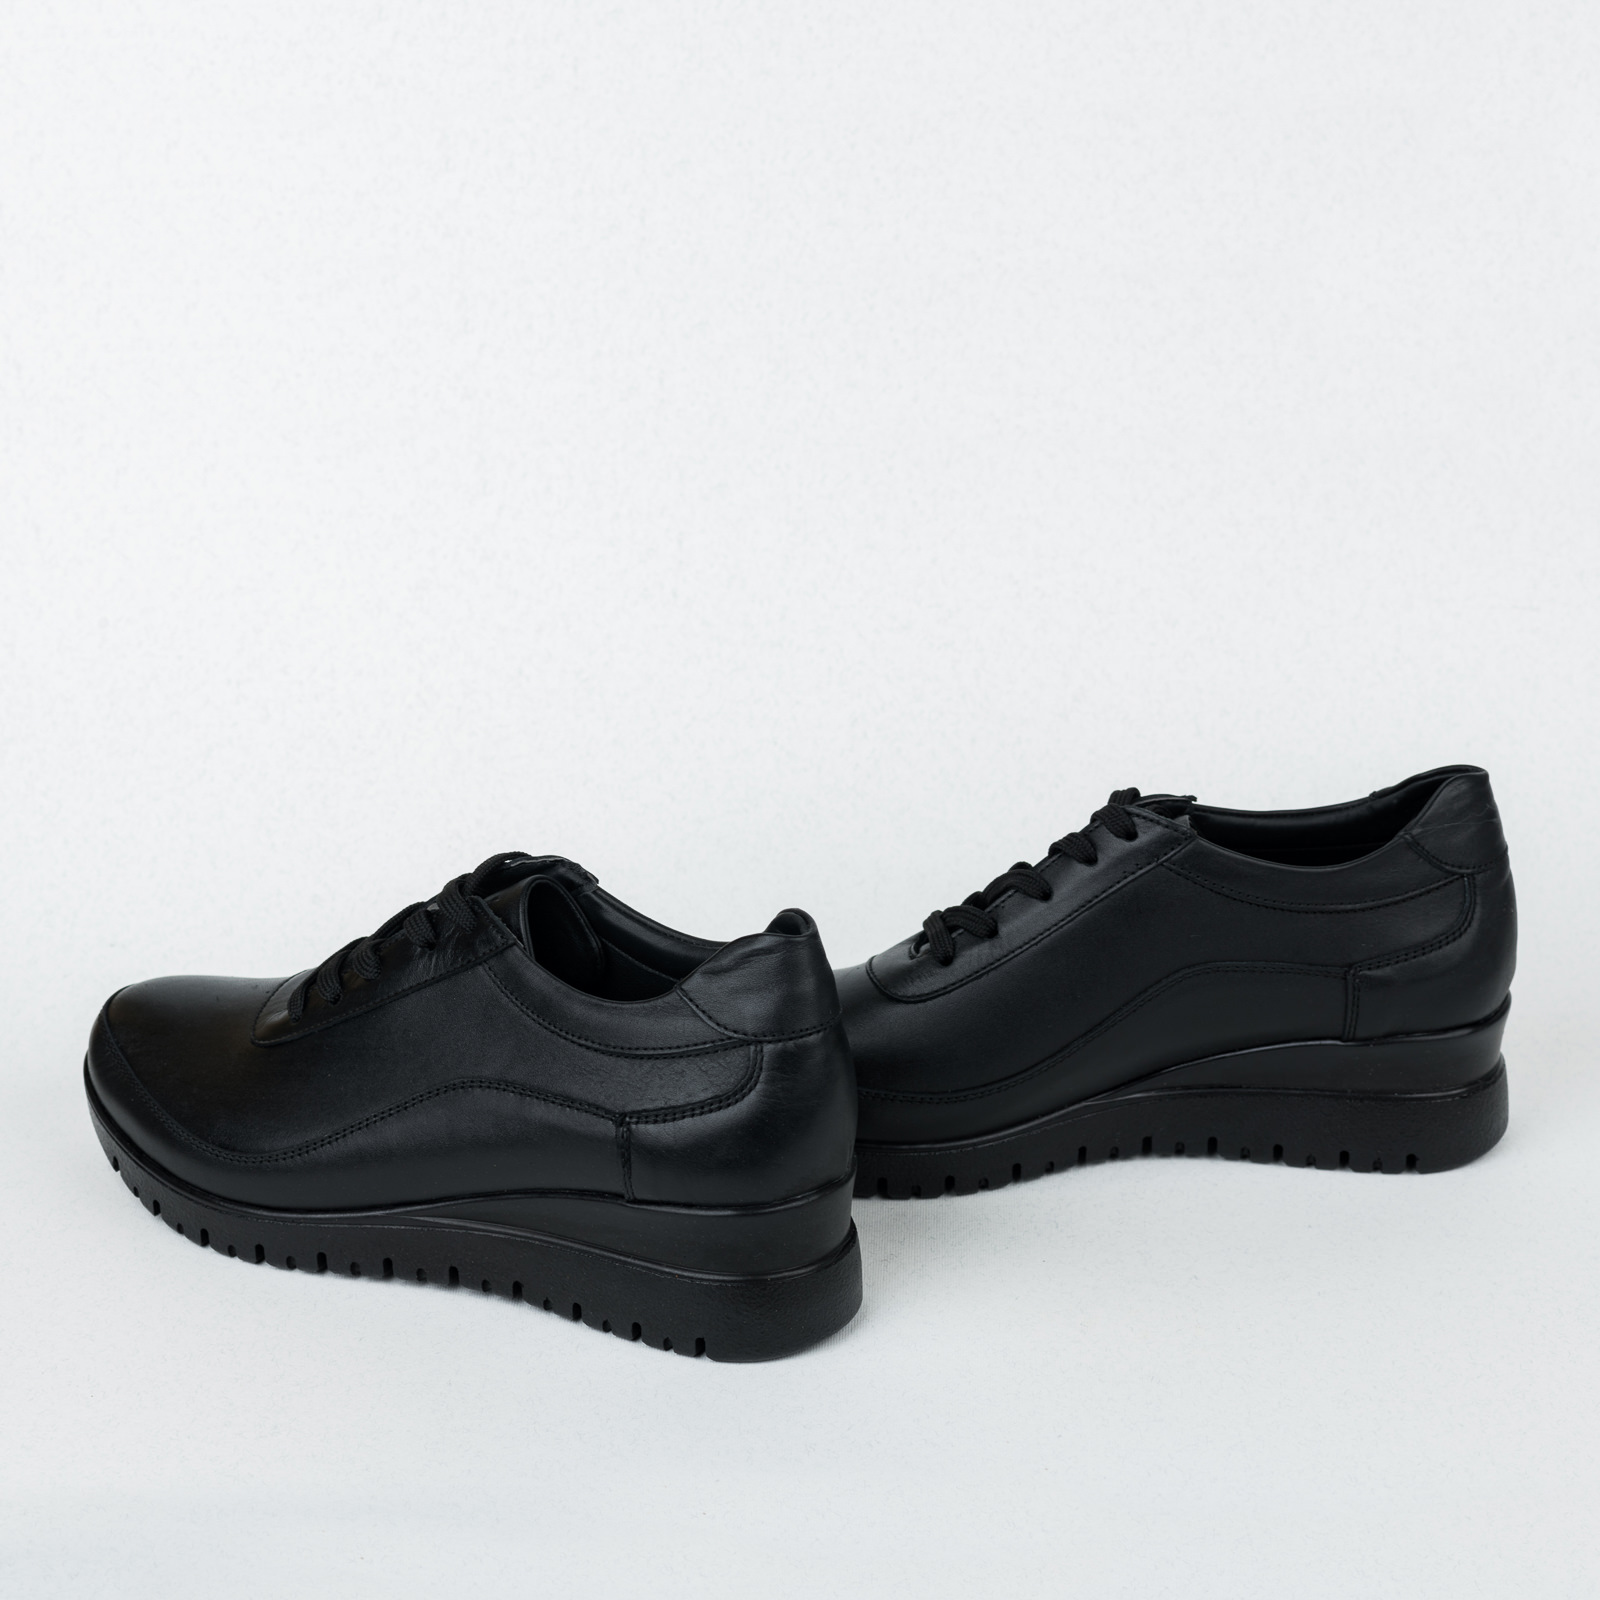 Leather shoes & flats B470 - BLACK